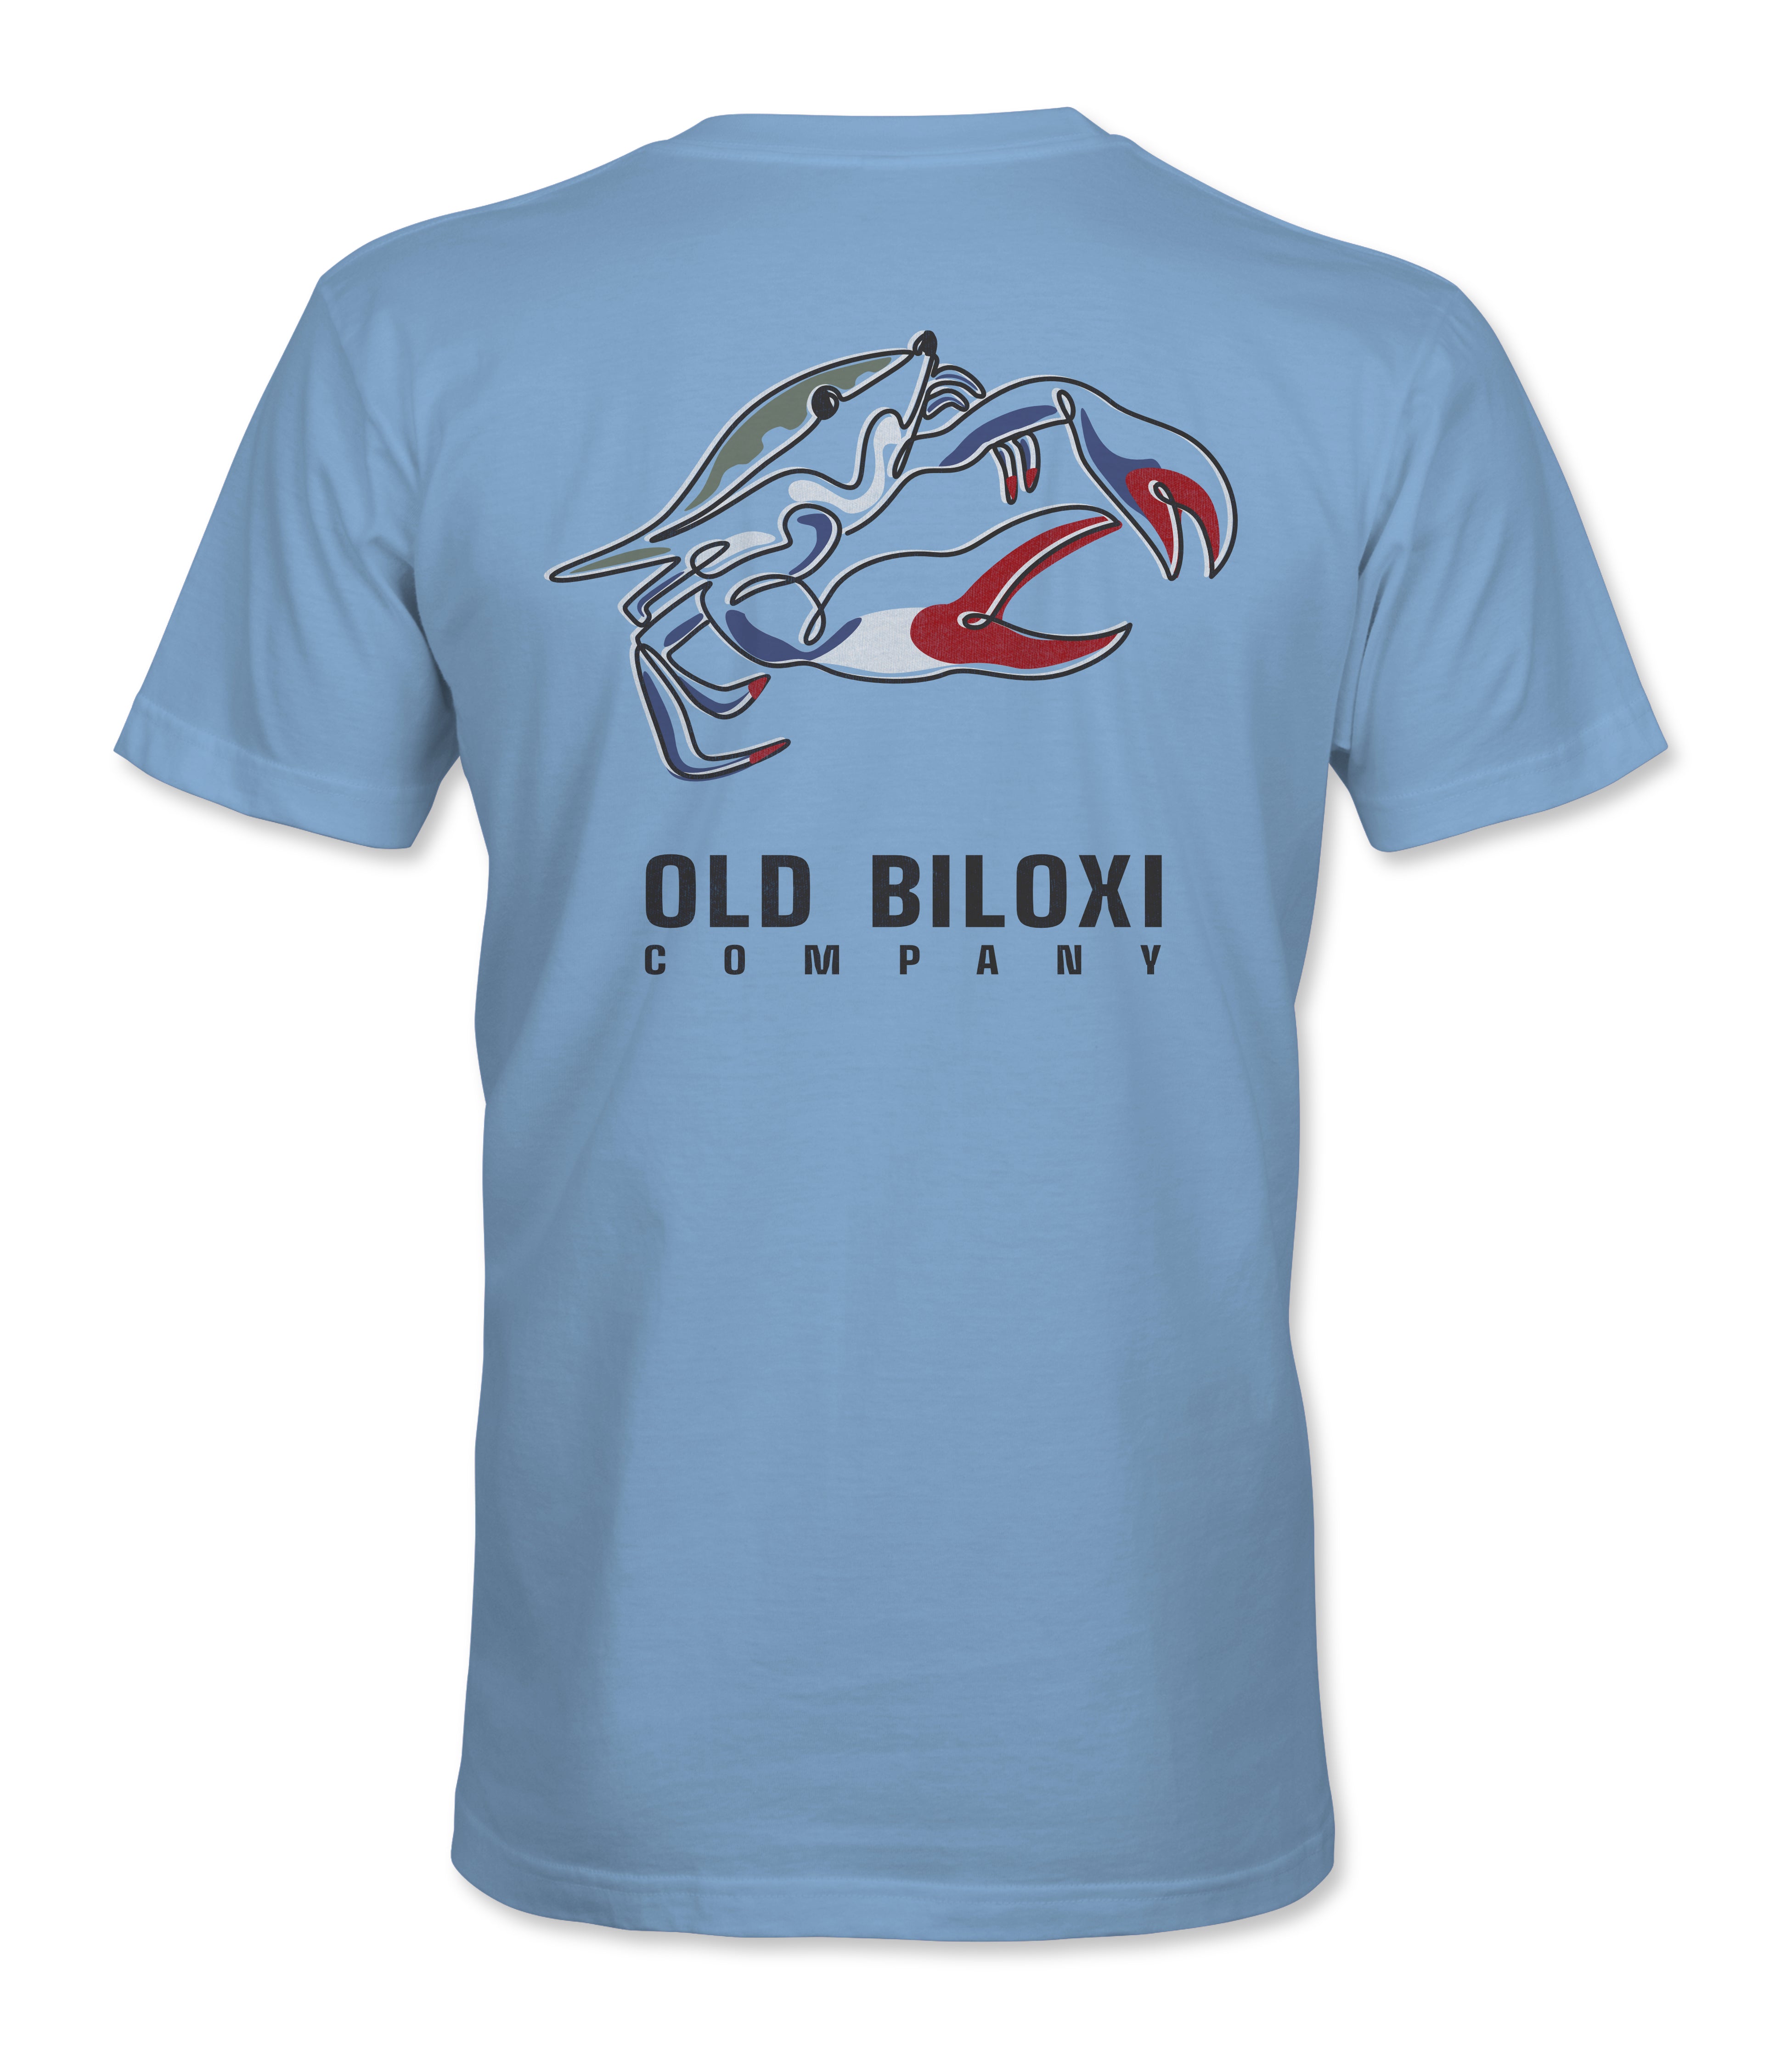 Blue Crab Shirt Large / Ocean Blue